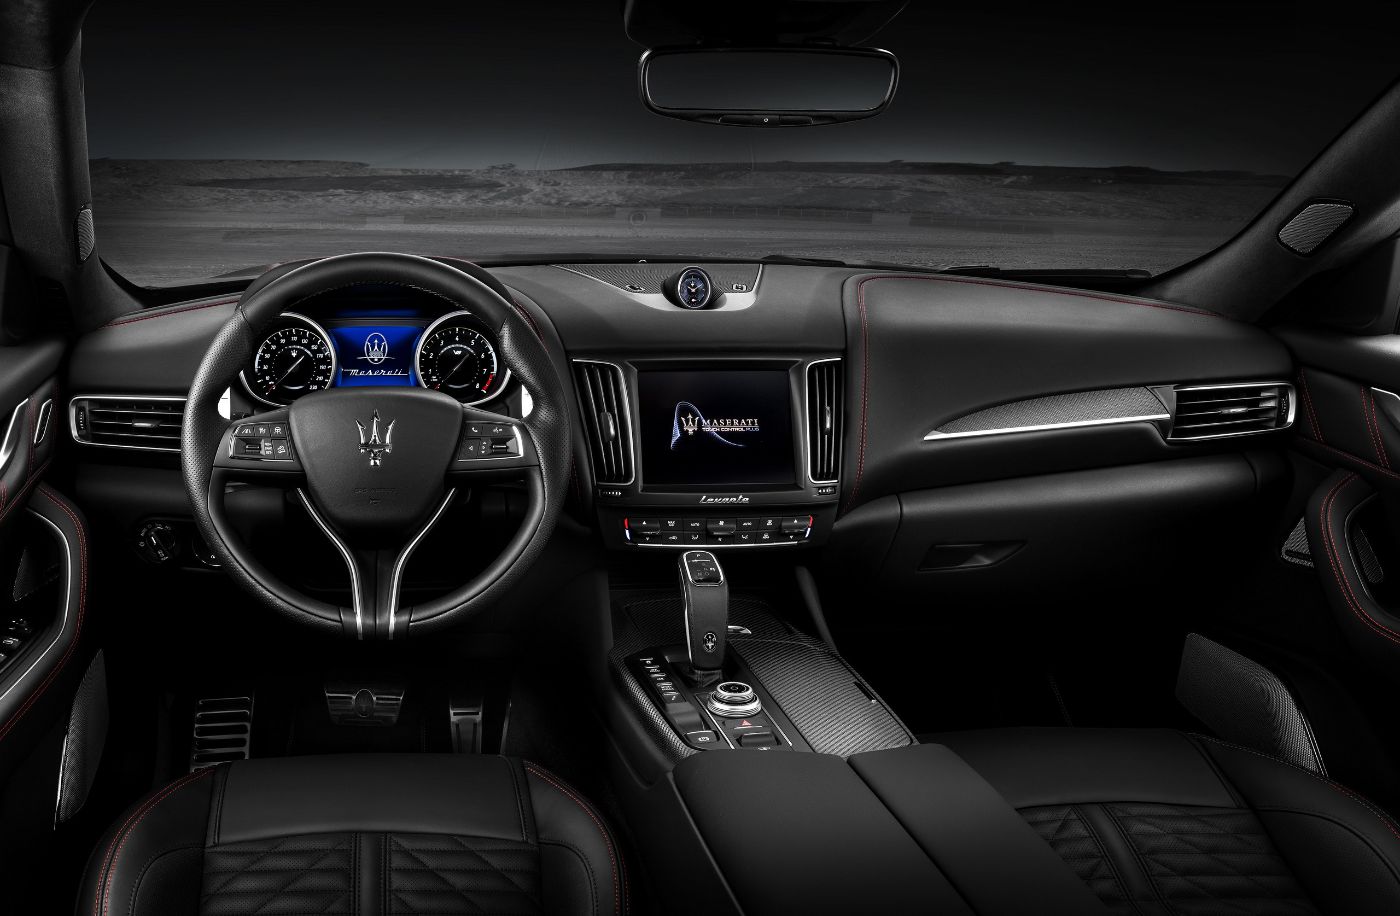 Maserati Levante Trofeo – the luxury SUV on the road, front view